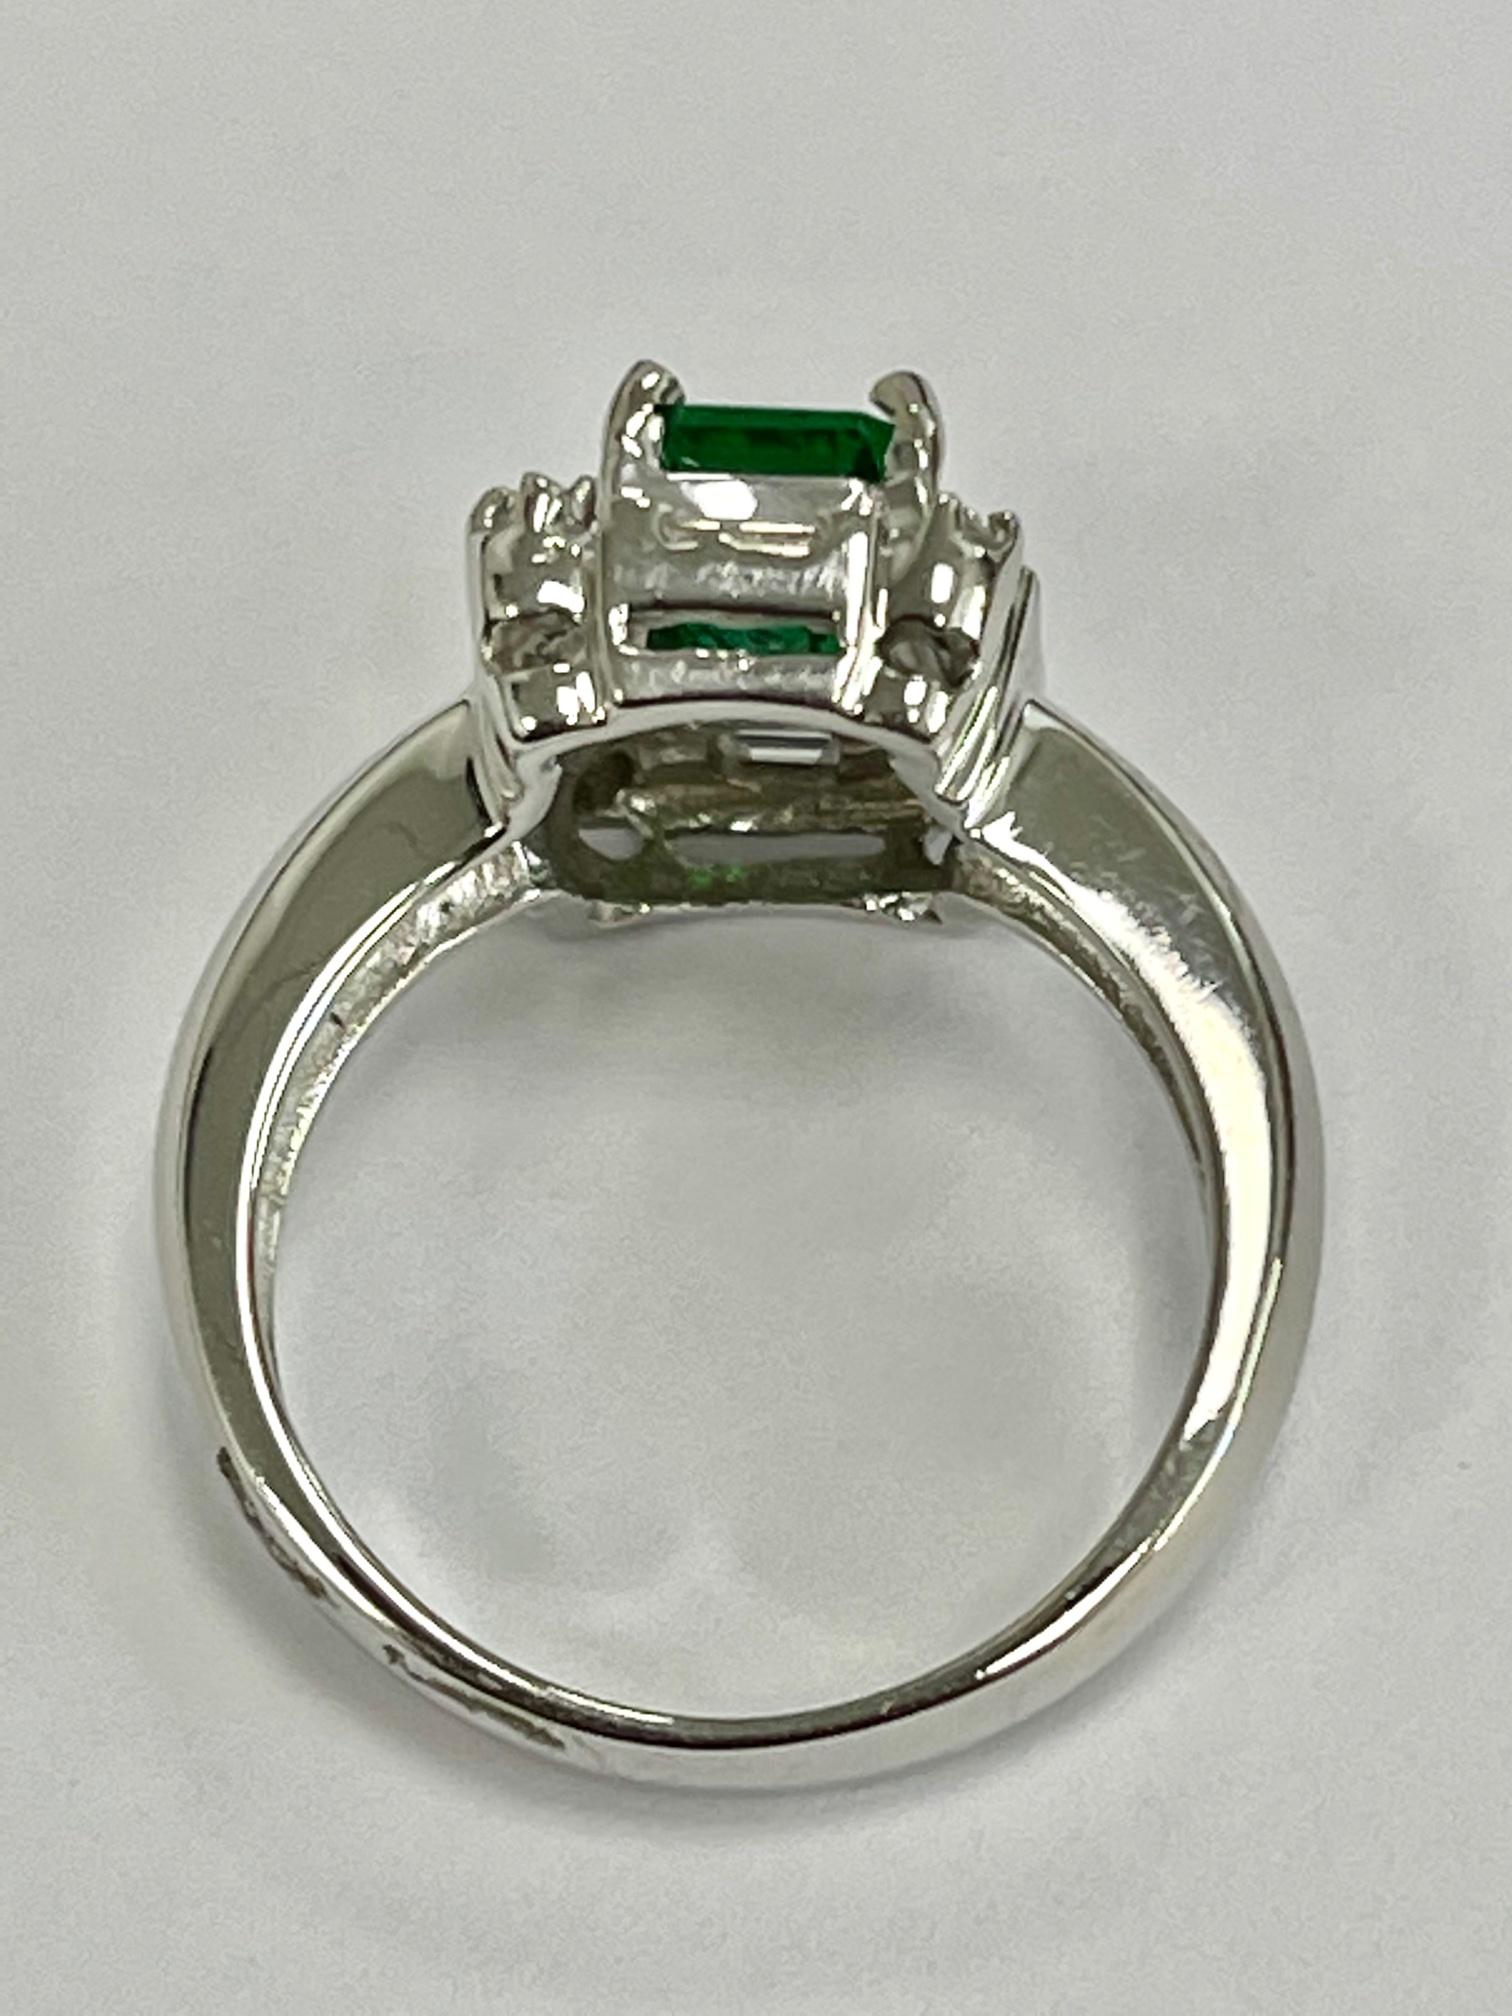 Emerald Cut 1.30 Carat Emerald Diamond Cocktail Ring For Sale